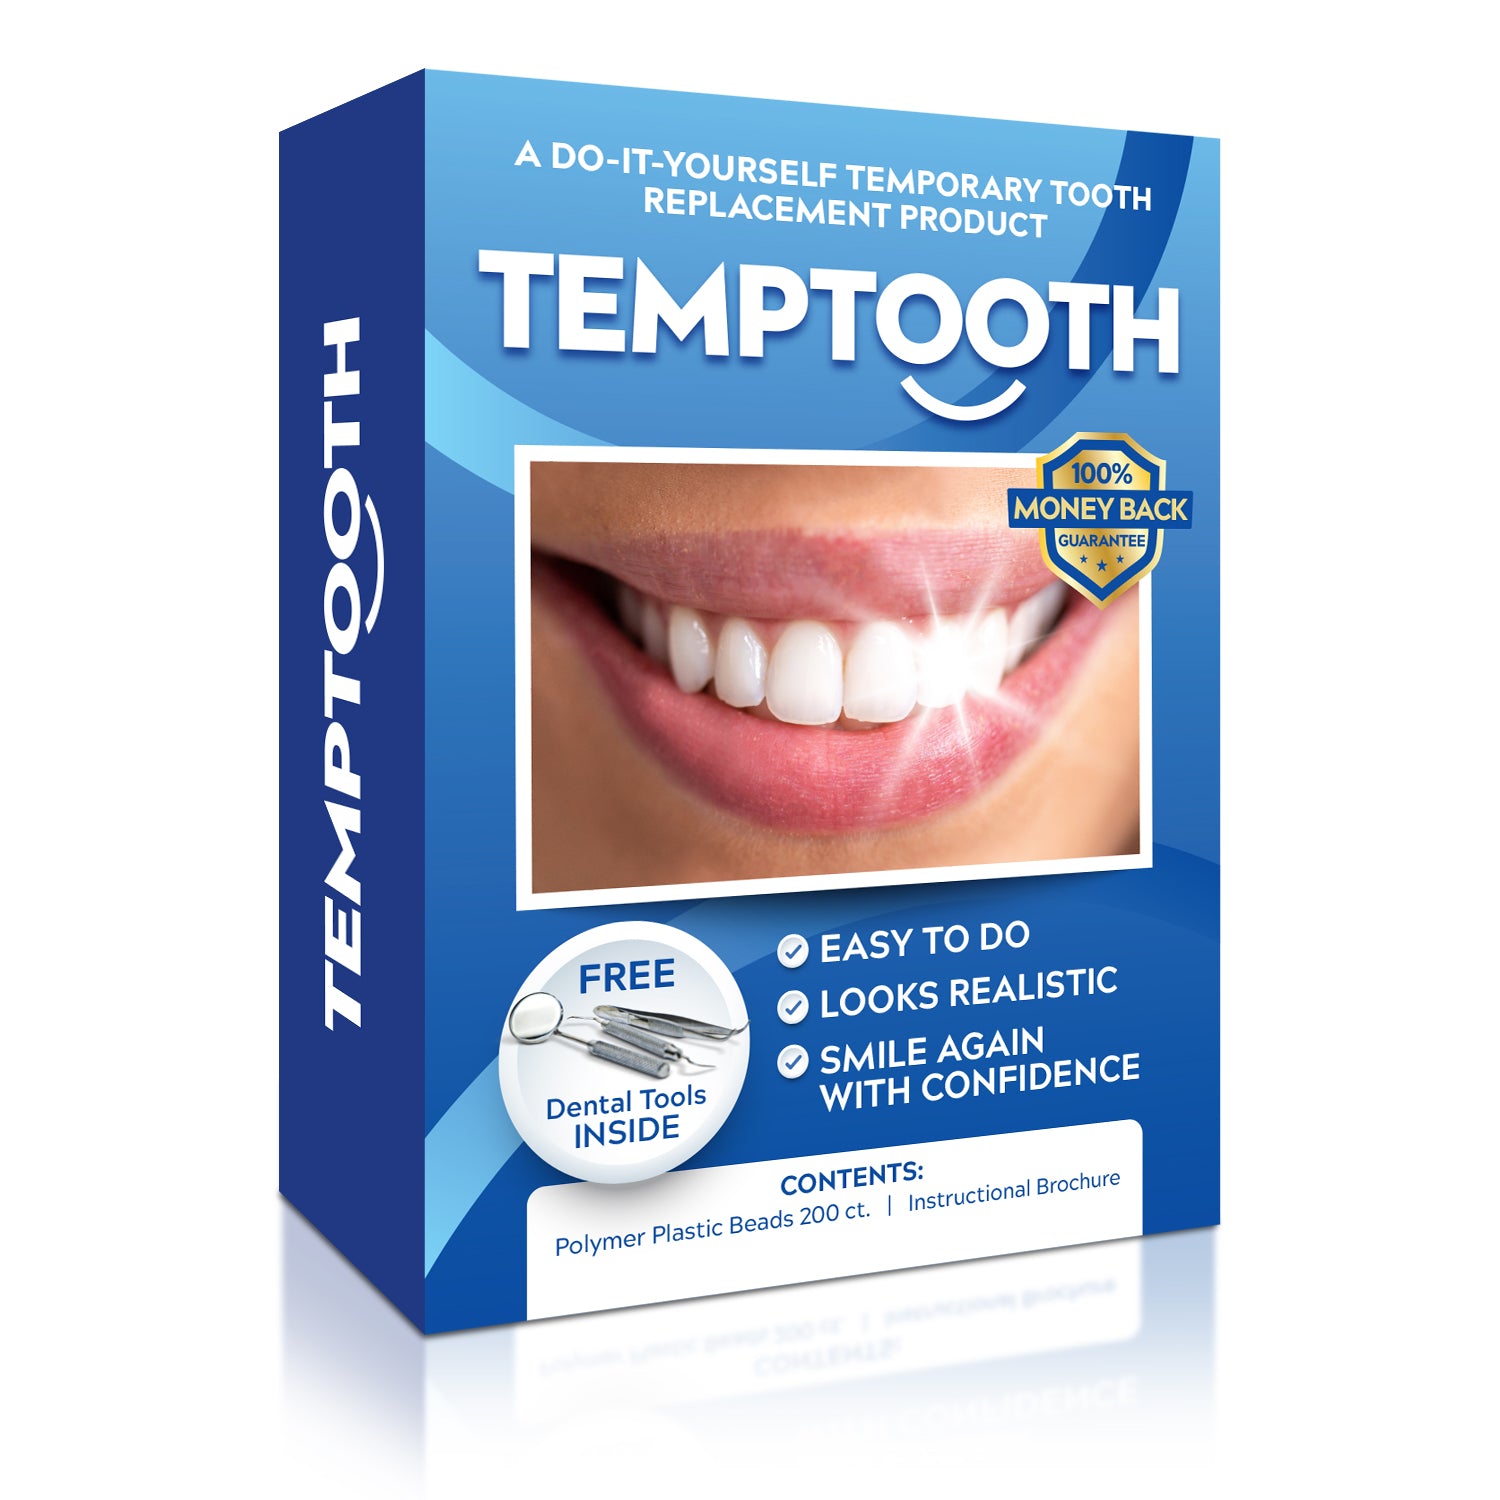 Tooth Repair Kit, Fake Teeth, Moldable False Teeth for Temp Tooth